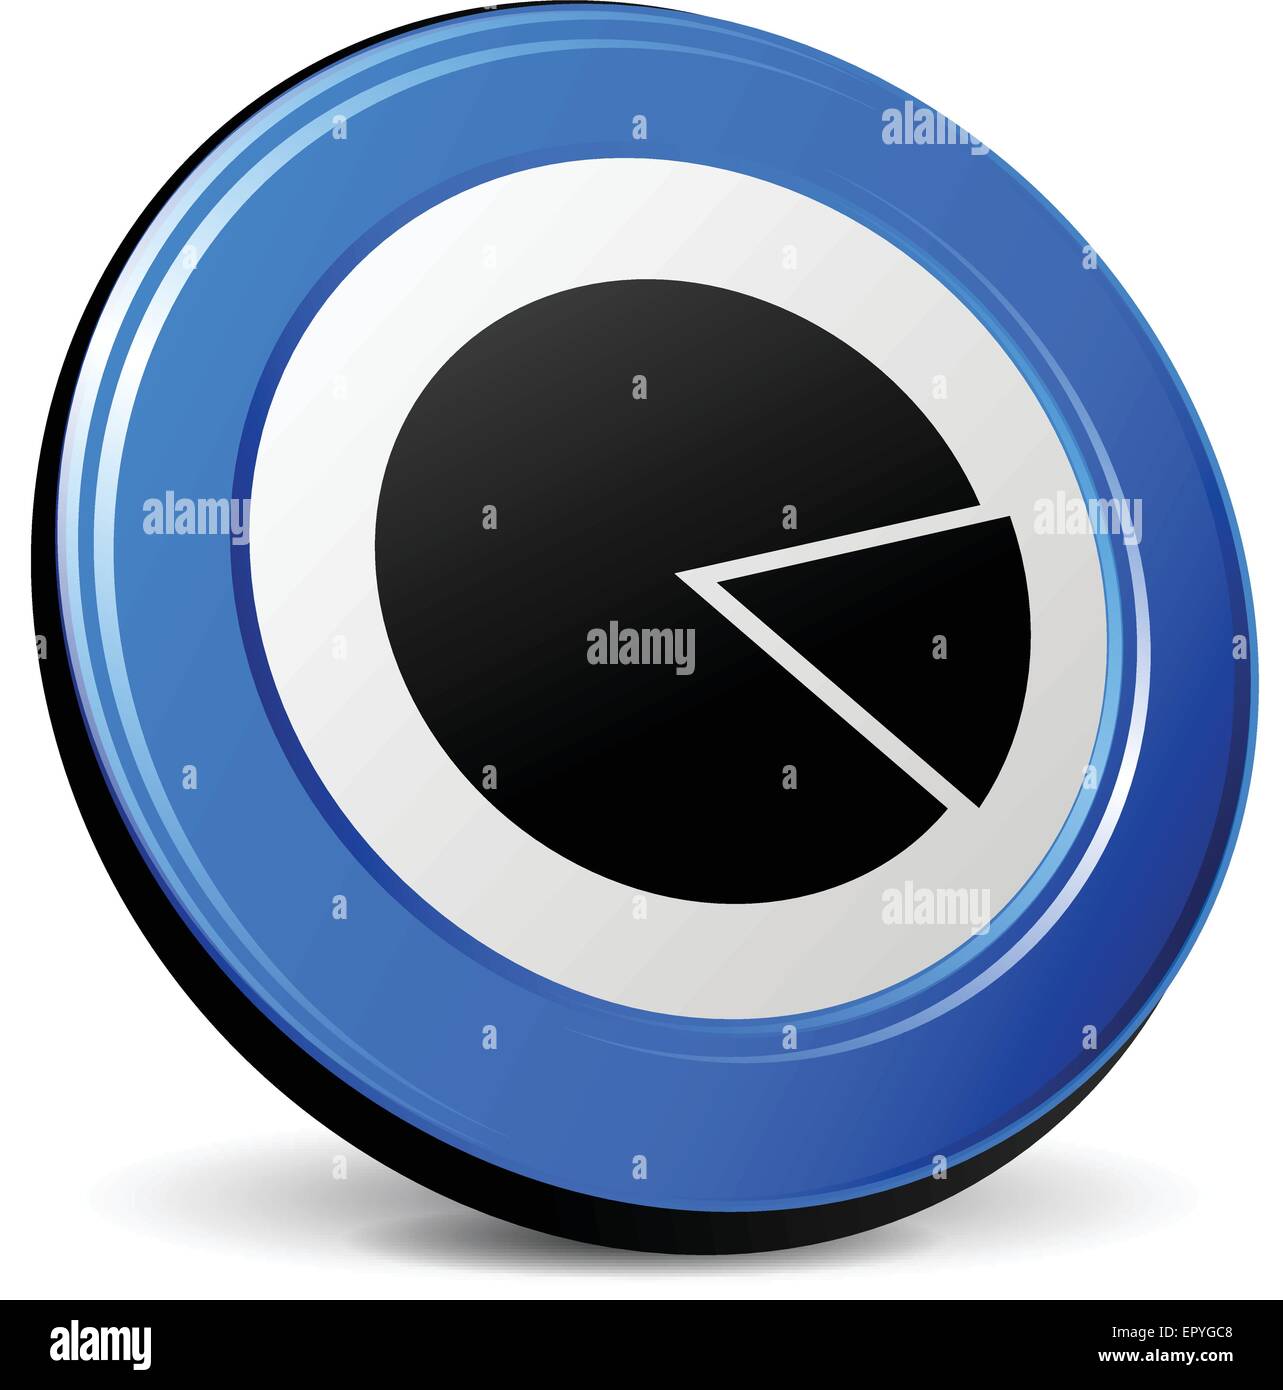 illustration of pie 3d blue design icon Stock Vector